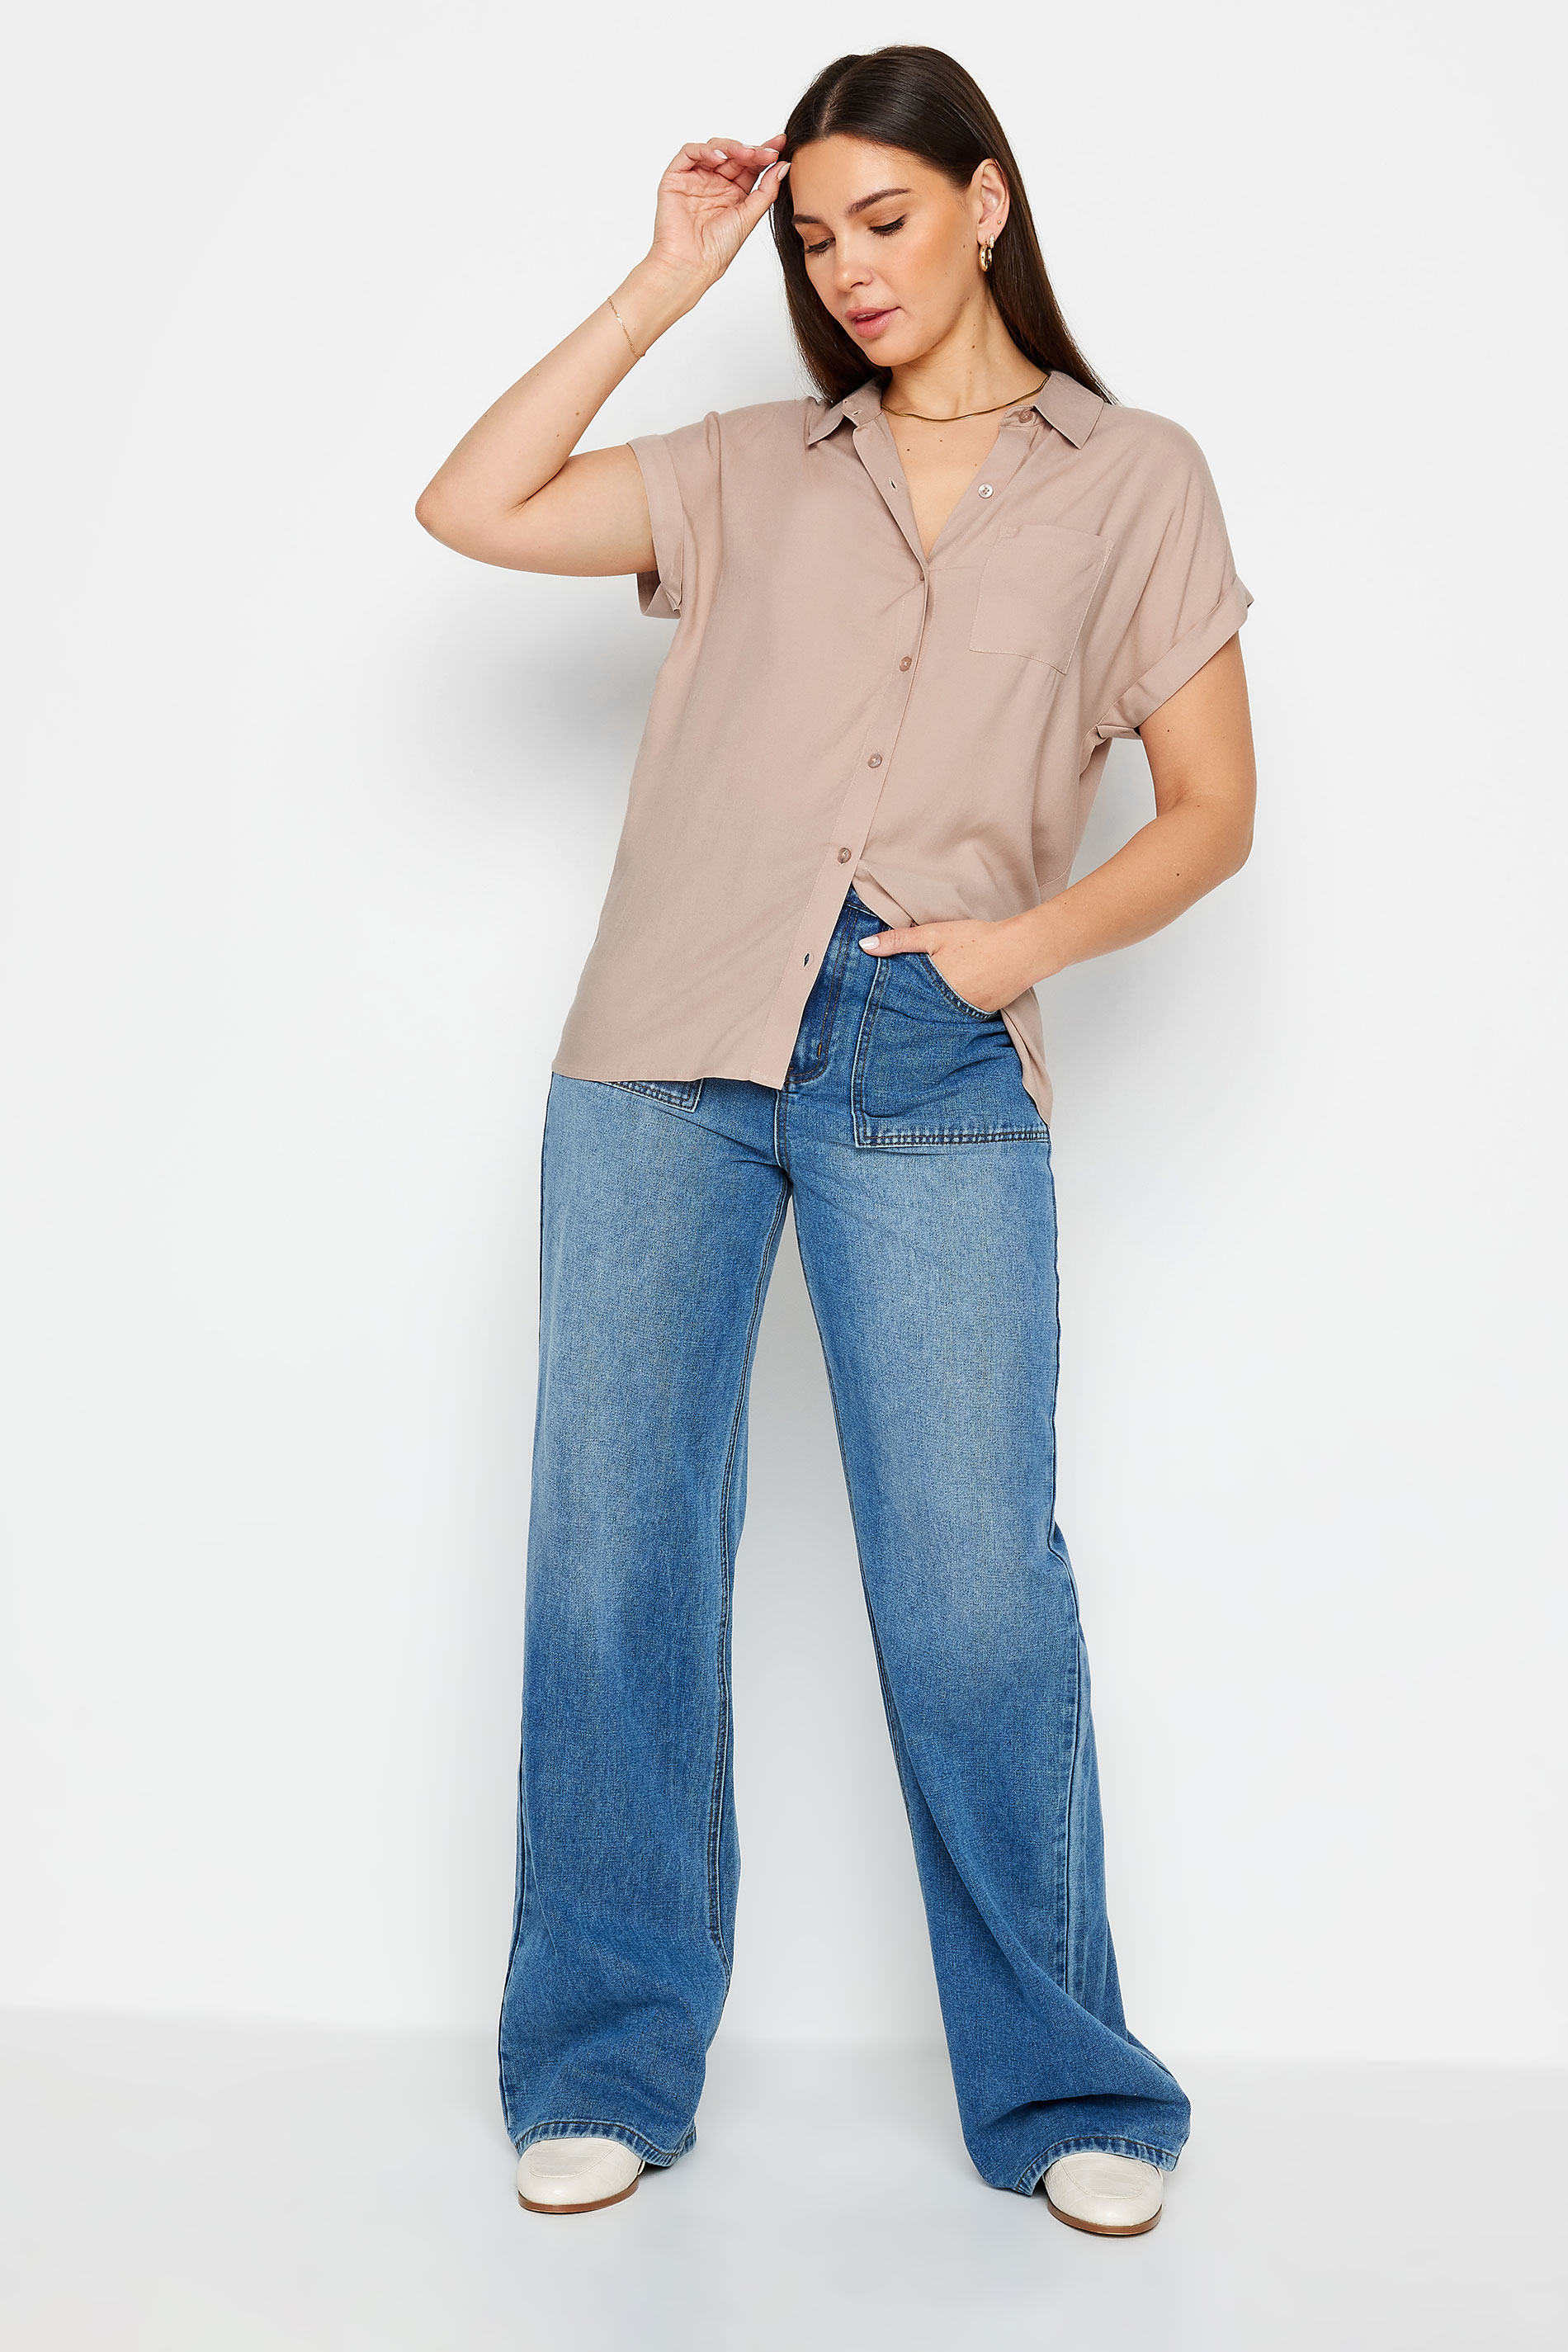 LTS Tall Womens Blush Pink Short Sleeve Shirt | Long Tall Sally 2